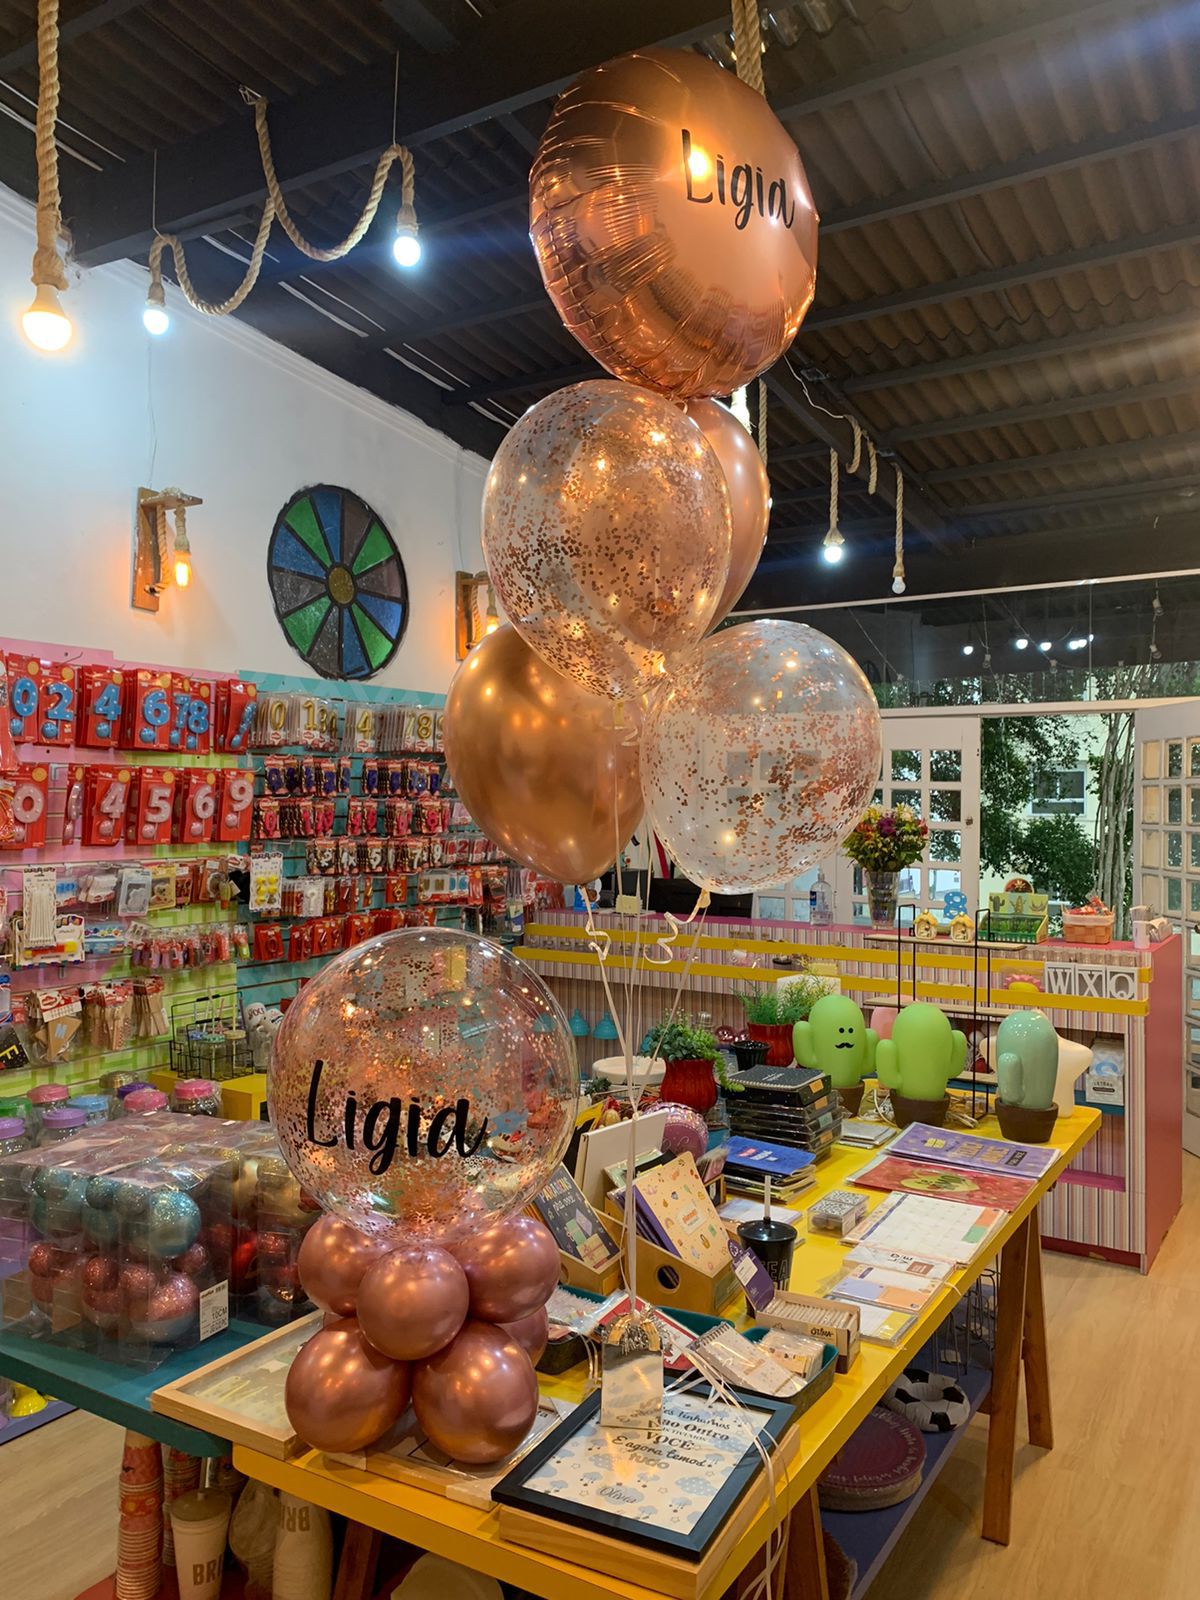 Teddys Bouquet - Arranjo com Bubbles e Balões de Látex - Teddy's